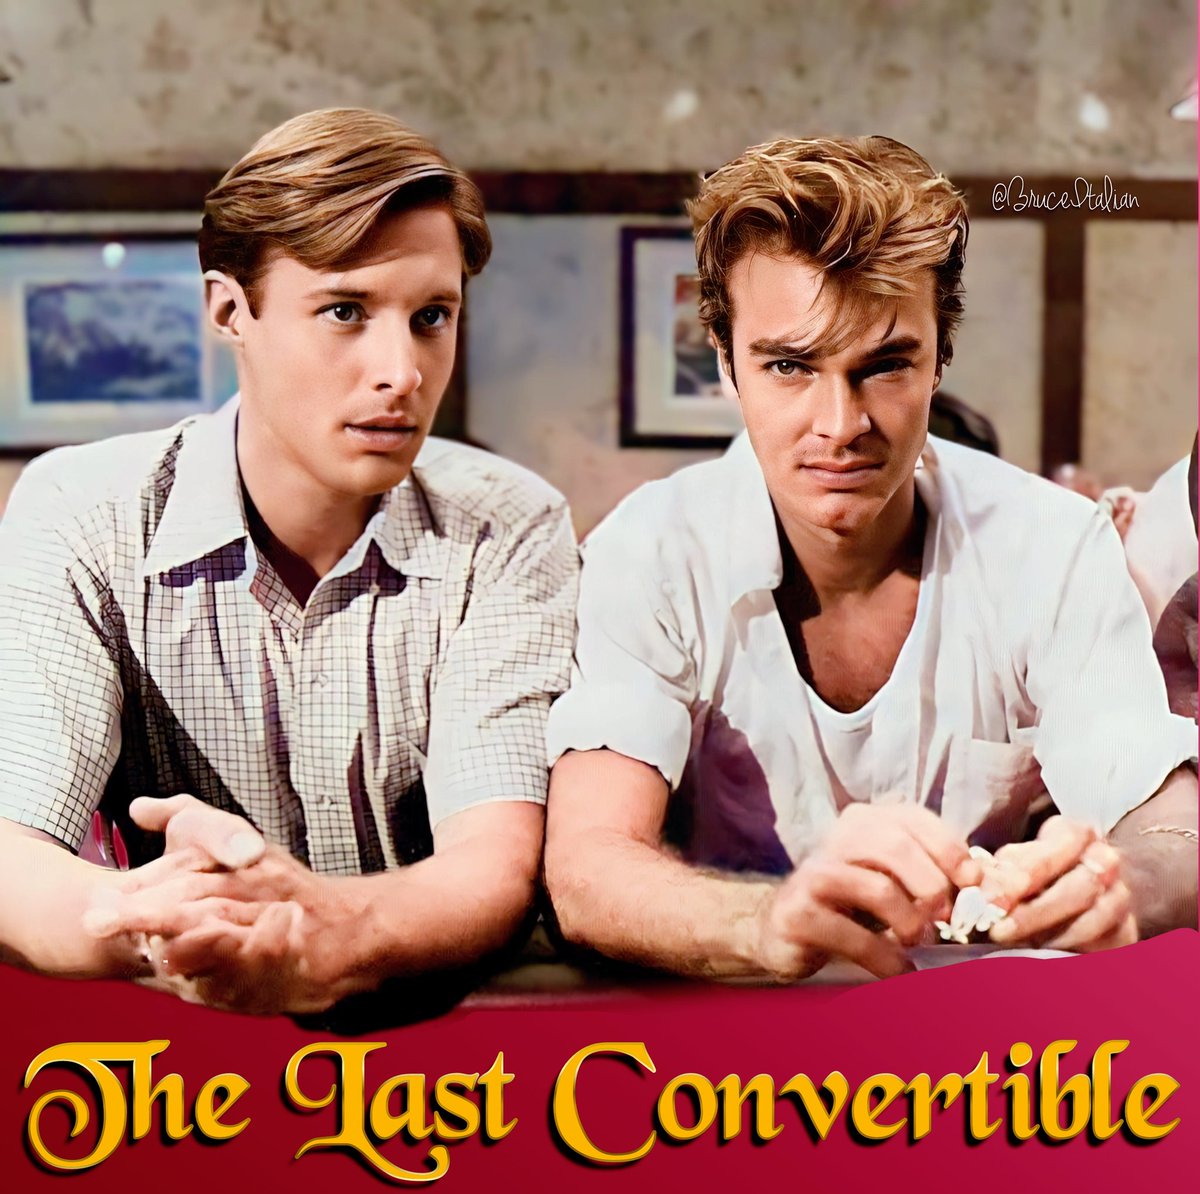 Bruce and #EdwardAlbert in the TV mini series 'The Last Convertible' (1979).
#BruceBoxleitner #PerryKing
#DeborahRaffin #thelastconvertible #NBC
#cadillaceldorado